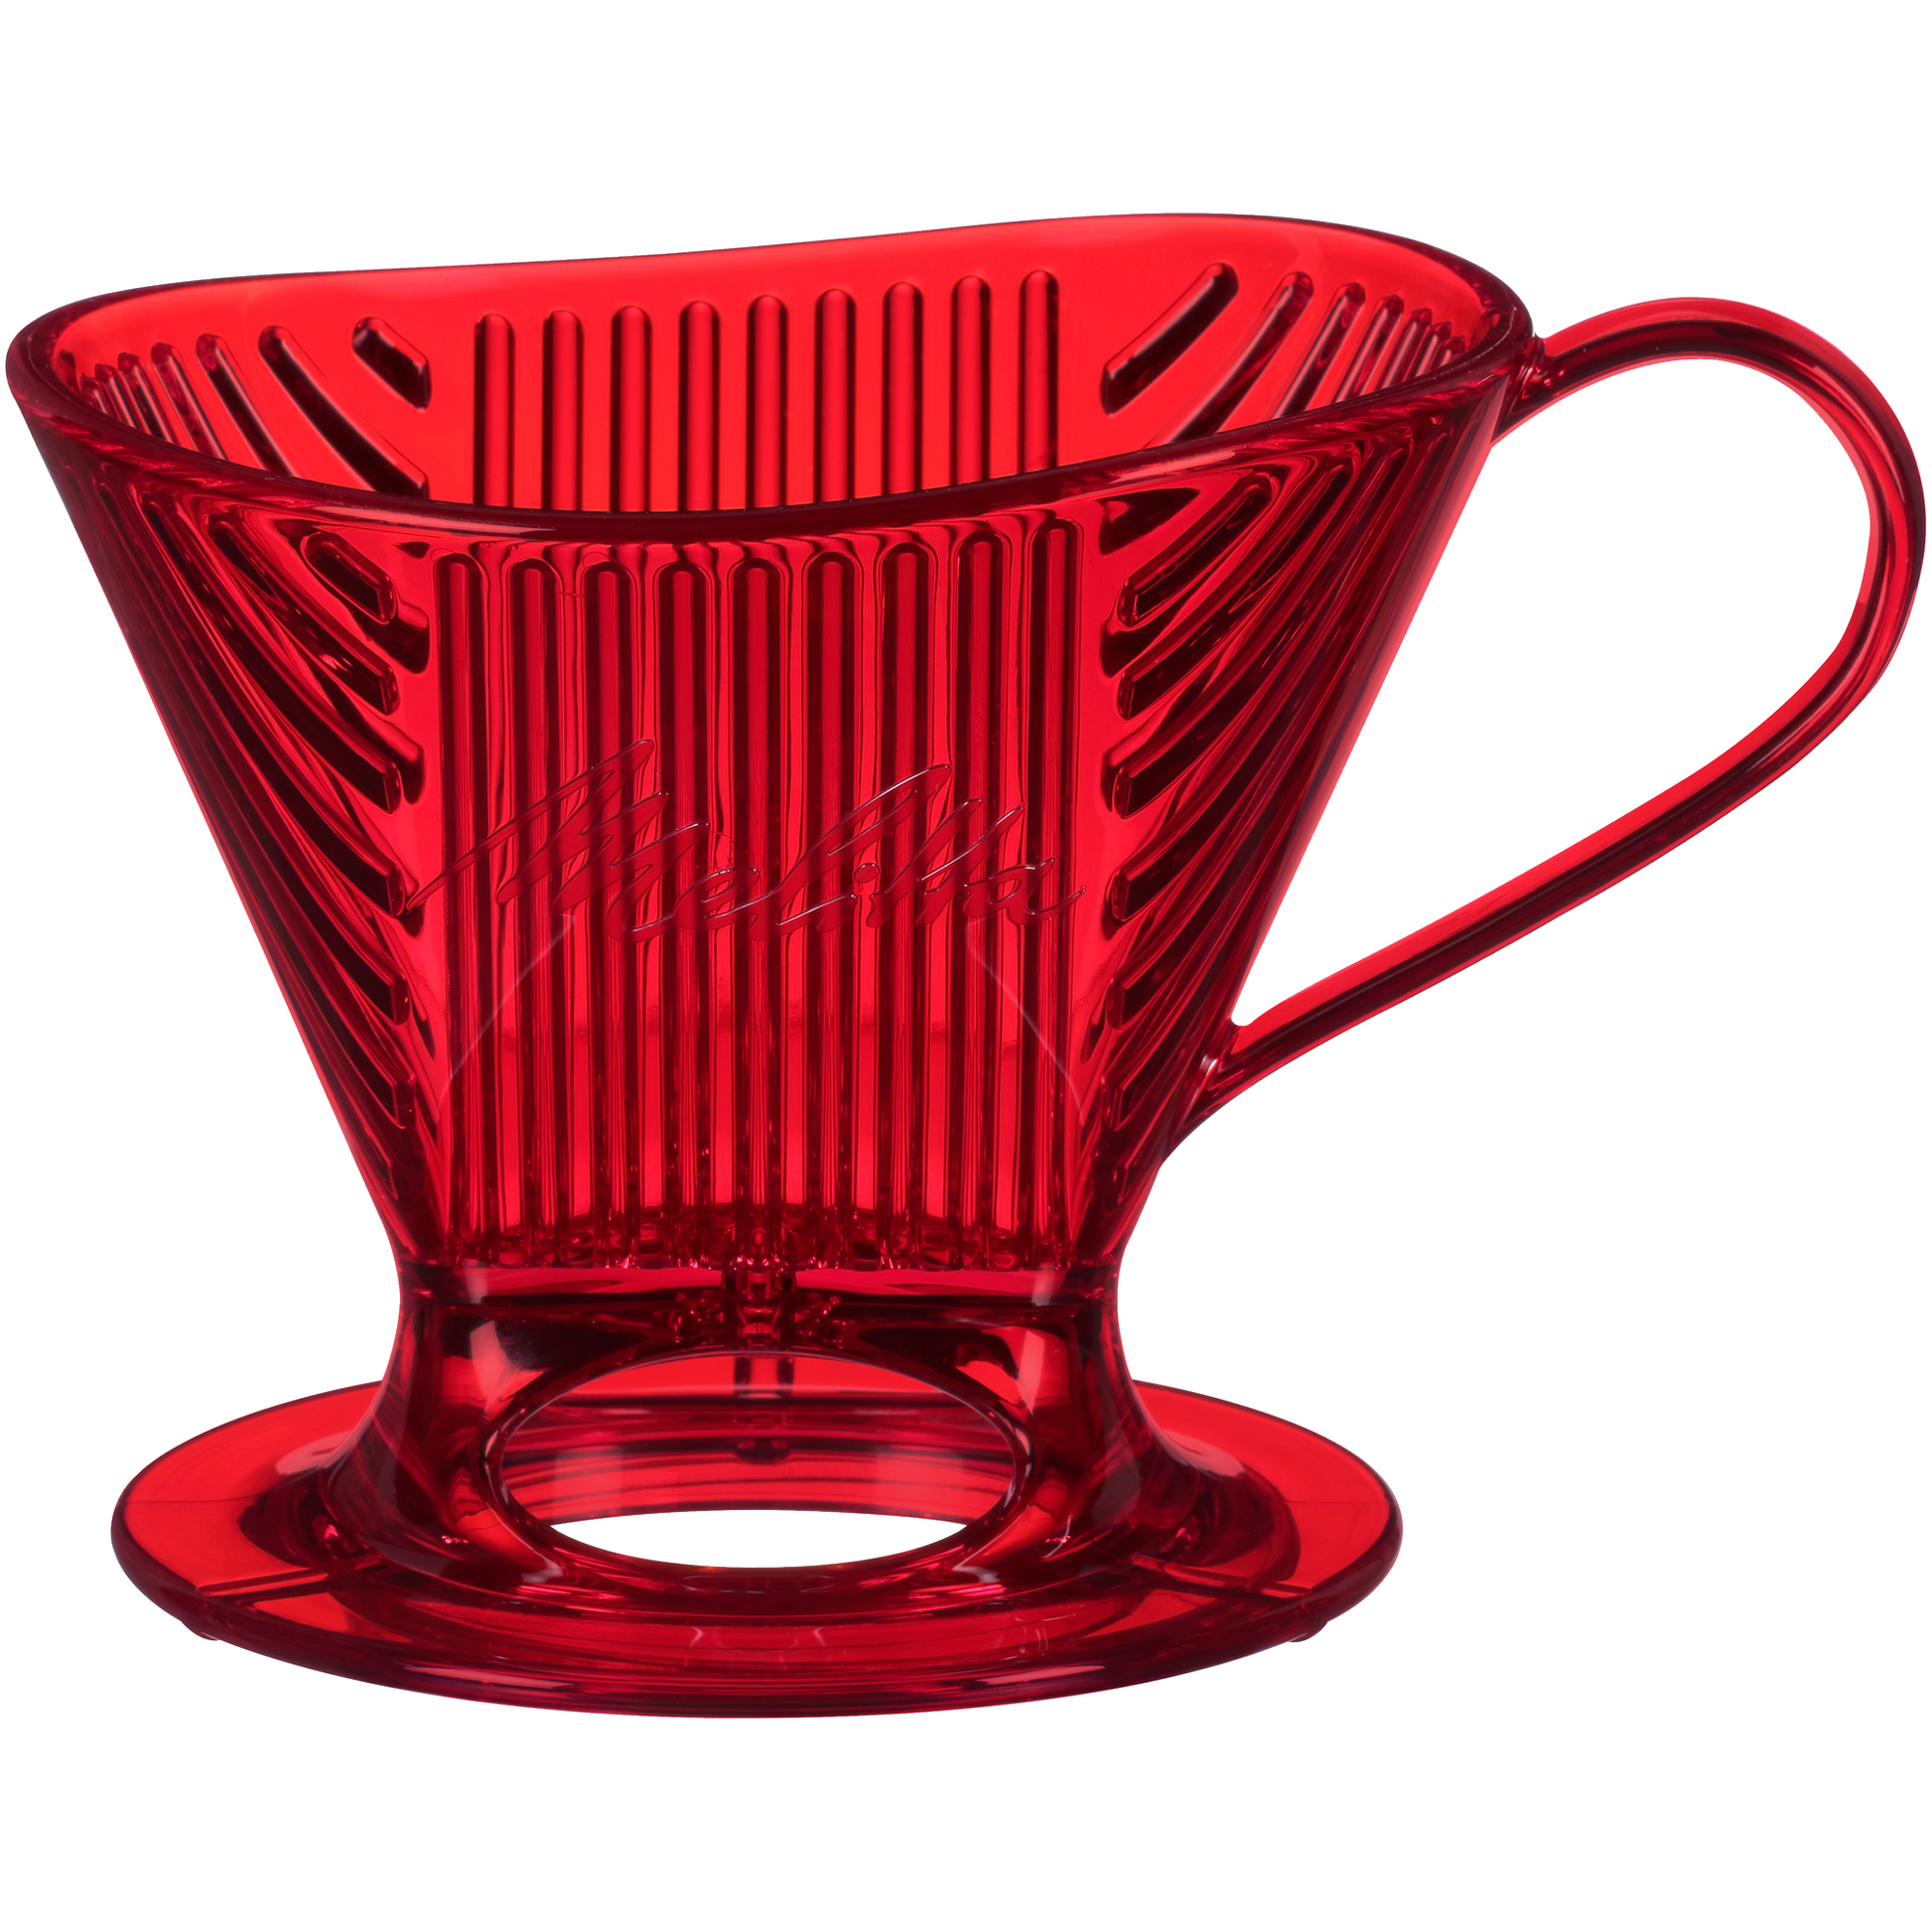 Keurig Signature Mug for Office (Red)